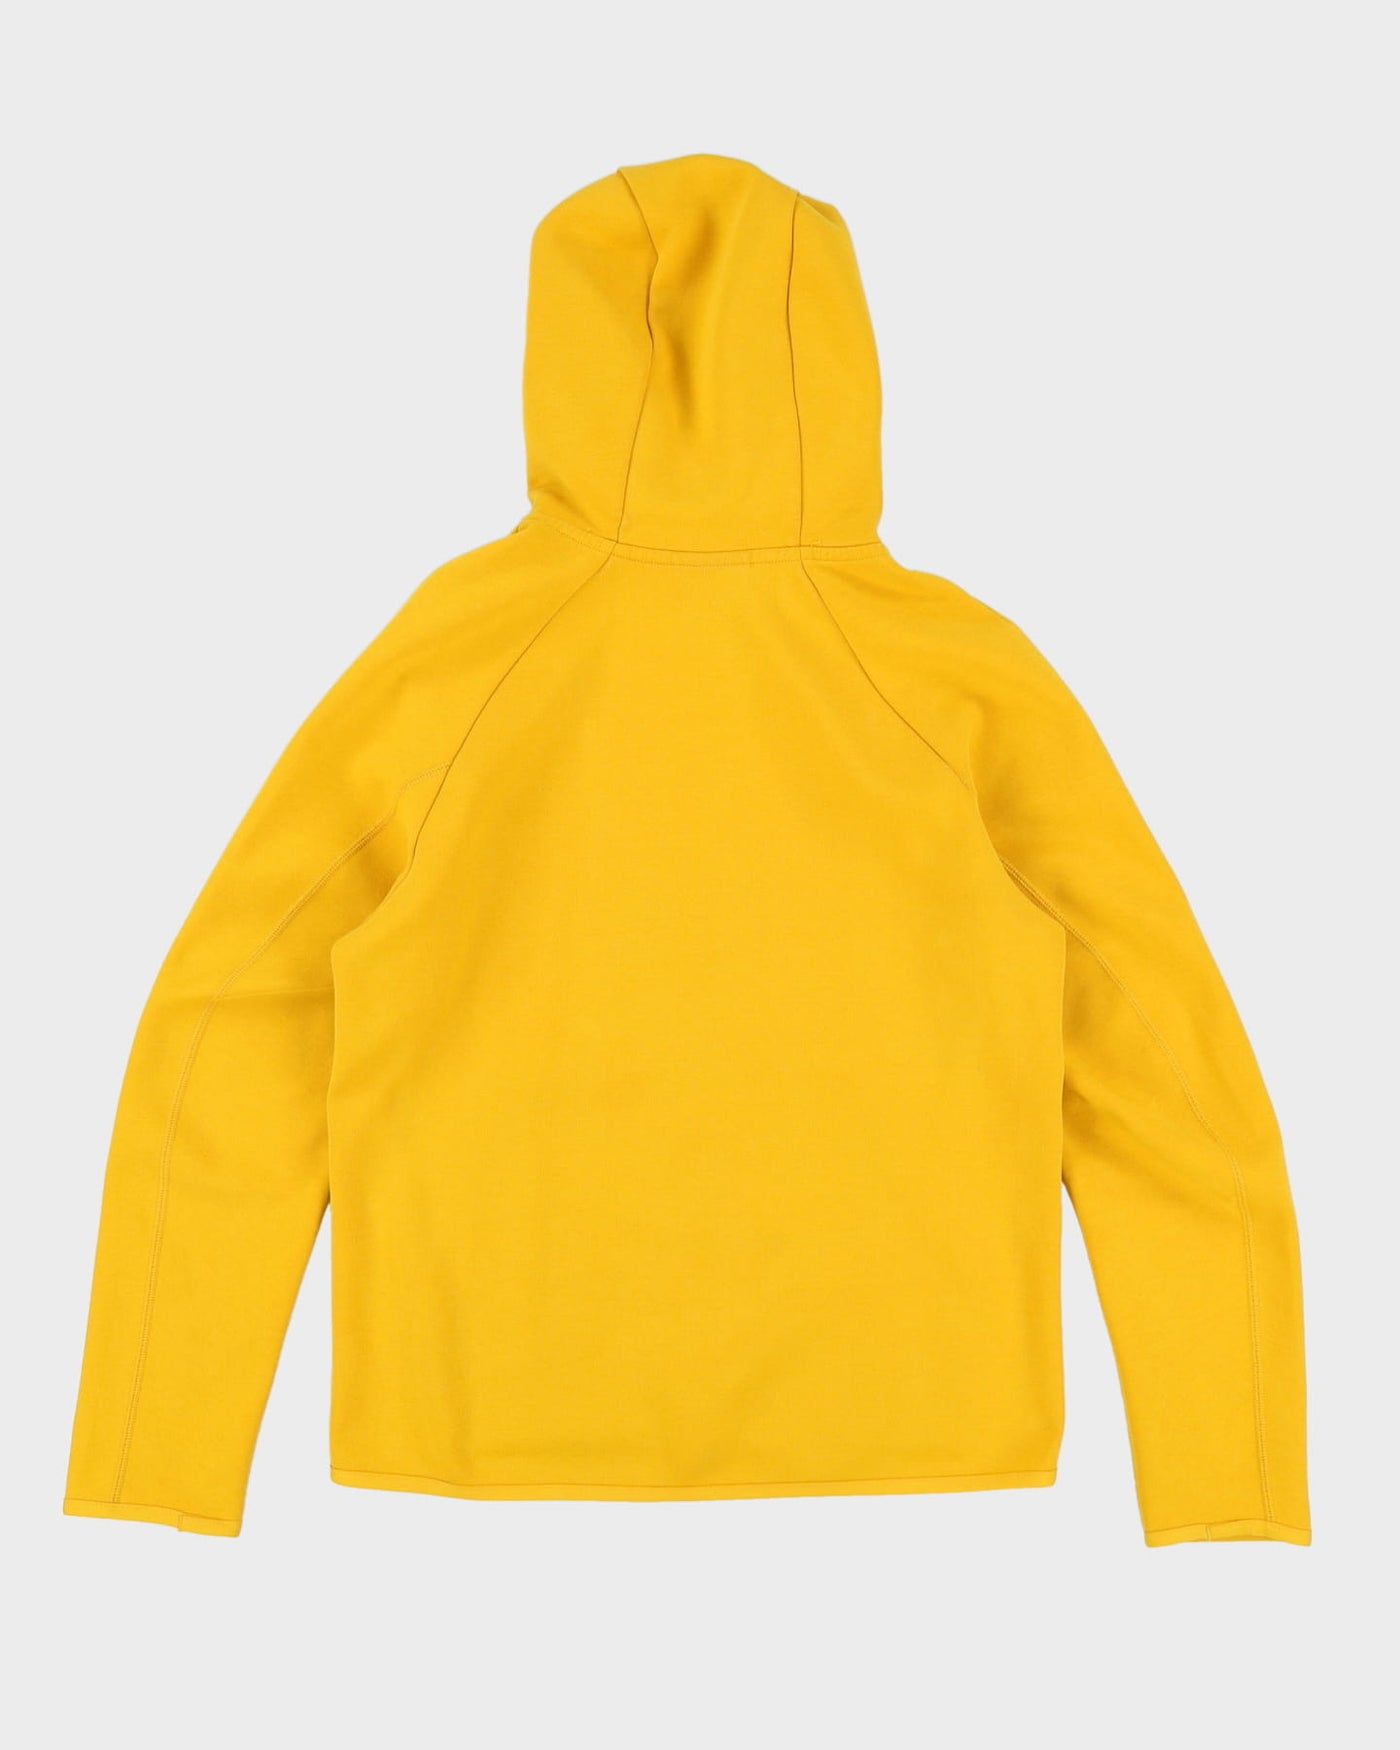 Nike Yellow Full Zip Hooded Track / Tech Jacket - S